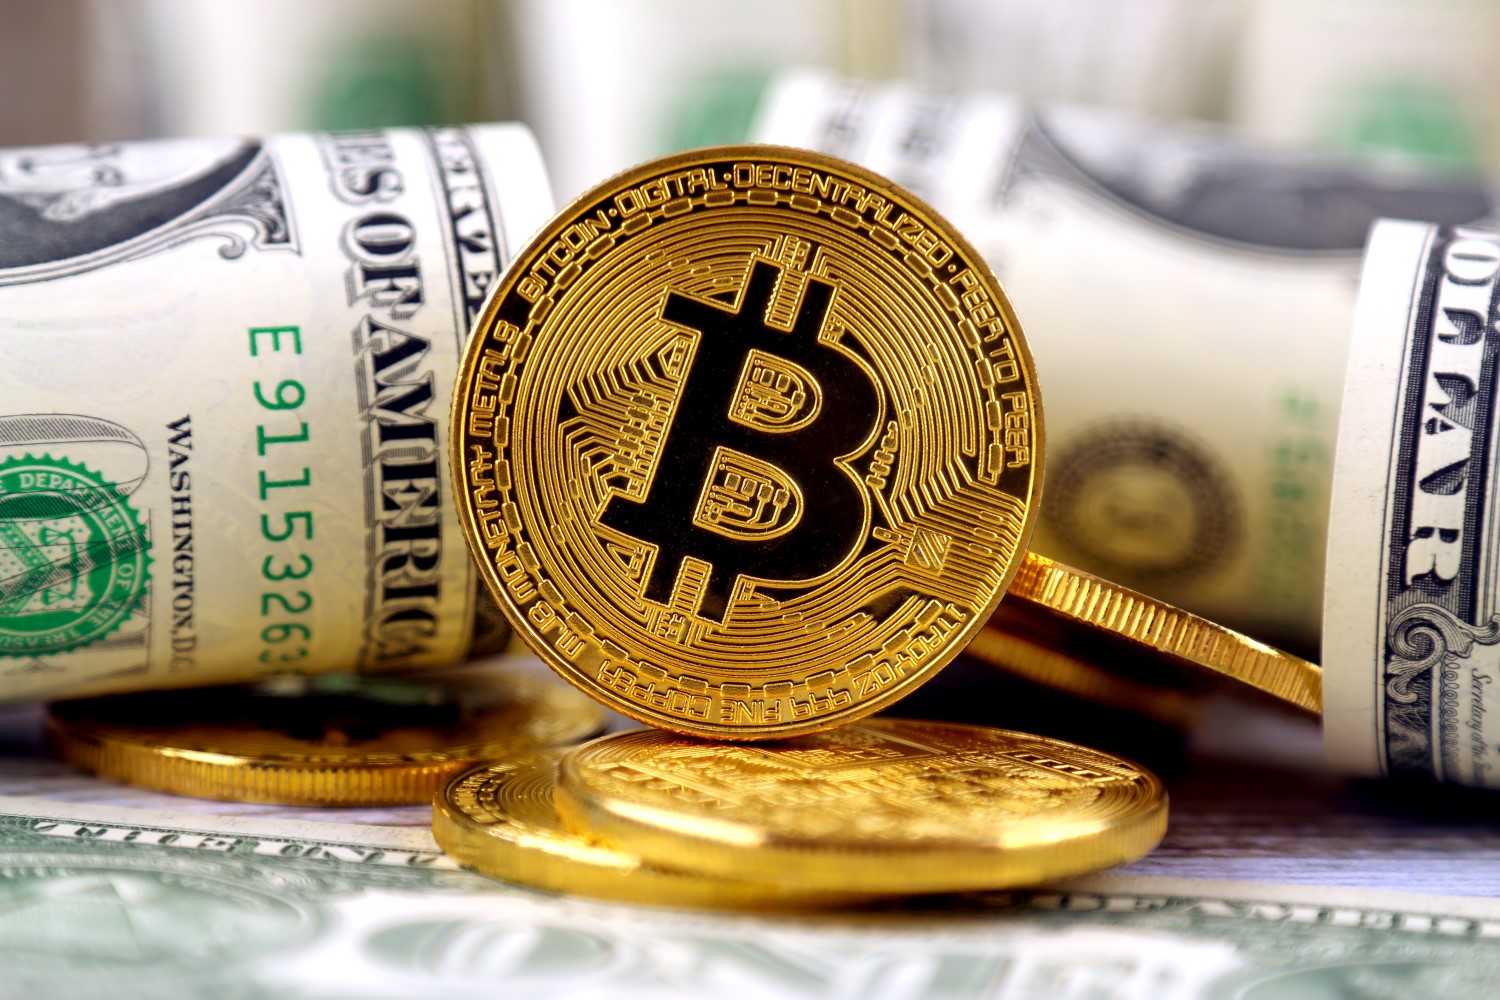 Bitcoin Faces Sub-$9K Price Move As Bear Trend Strengthens